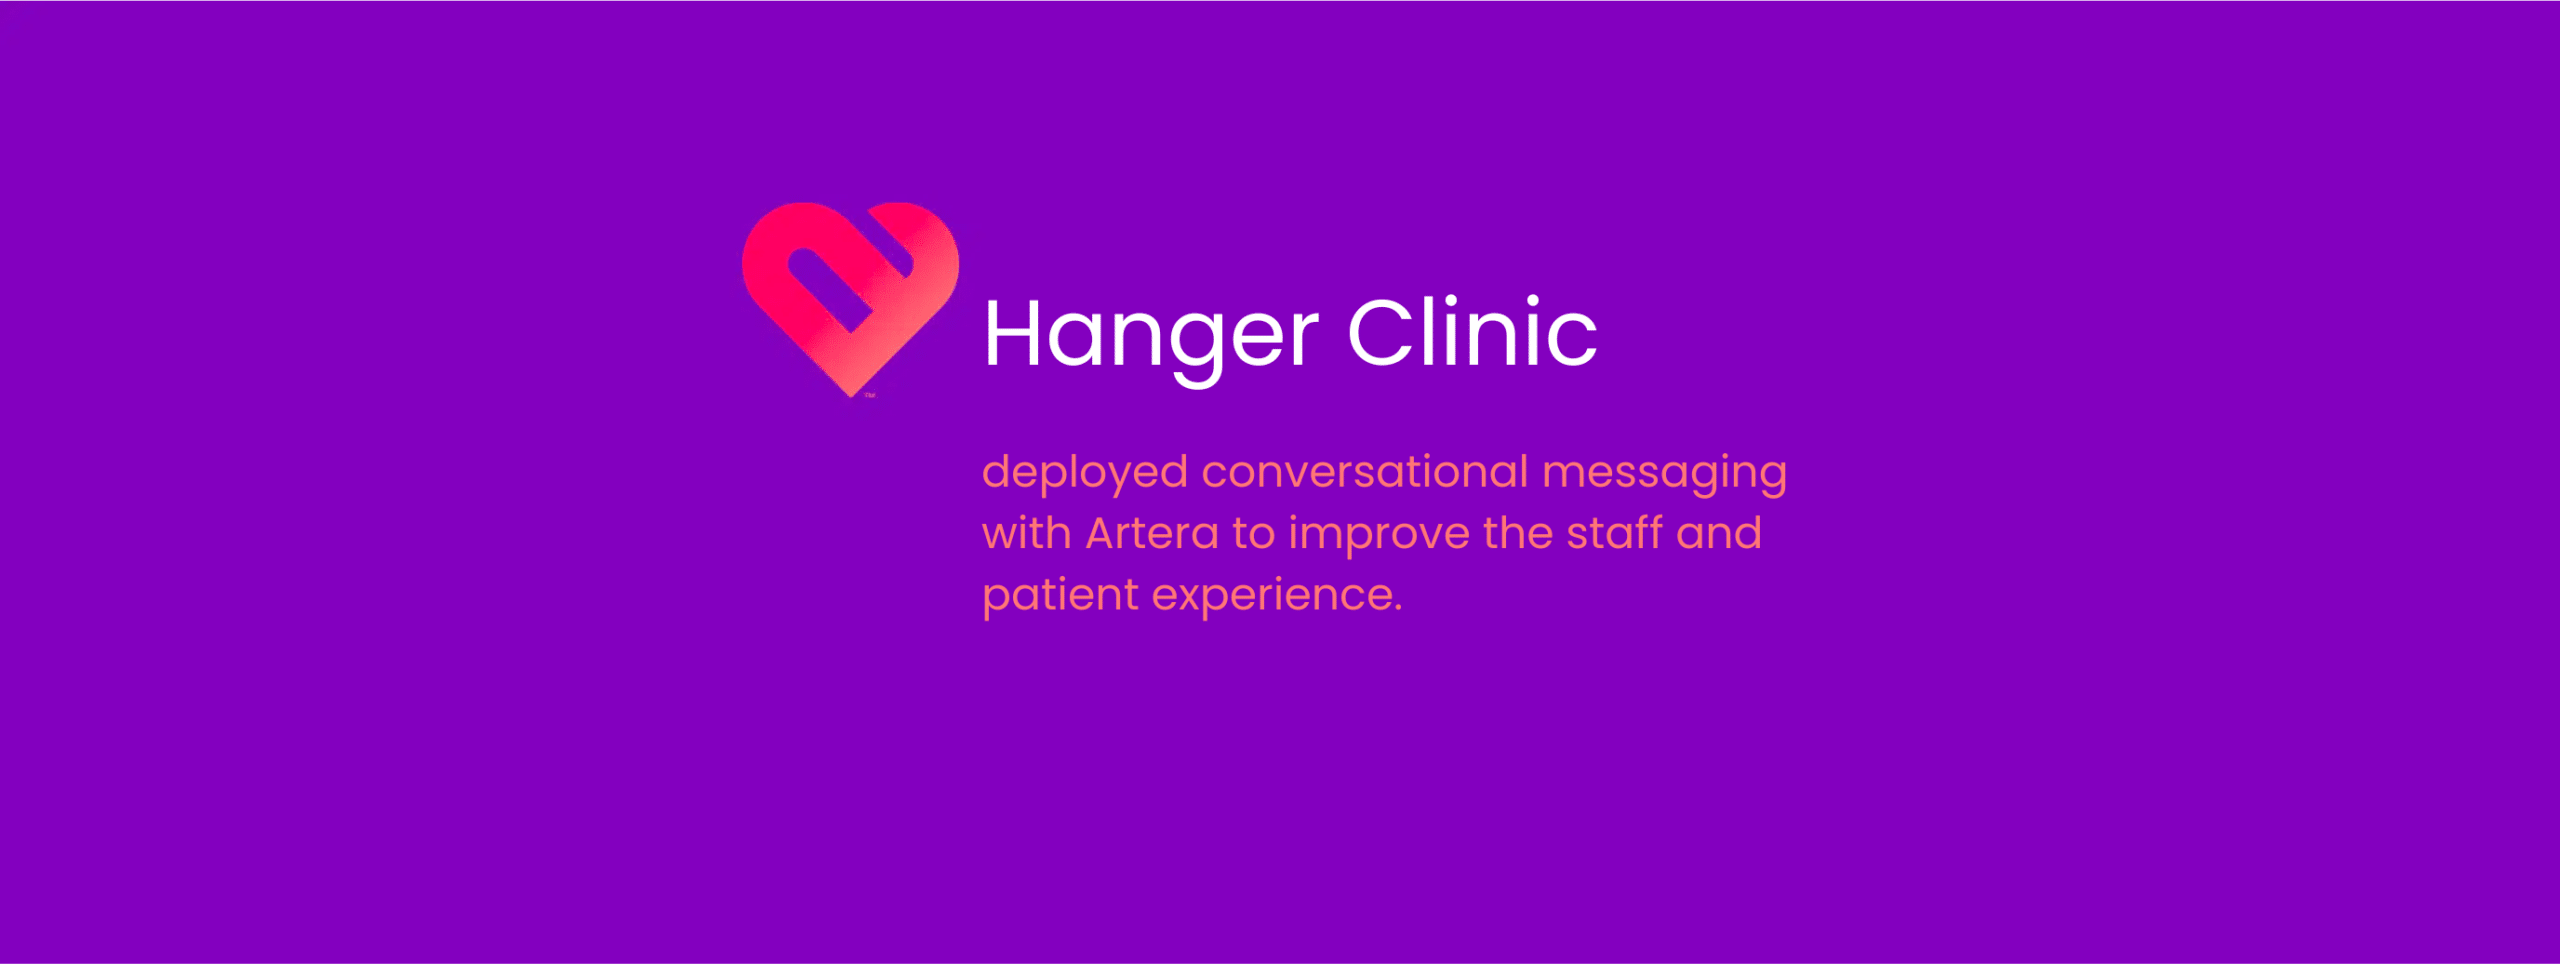 Hanger clinic